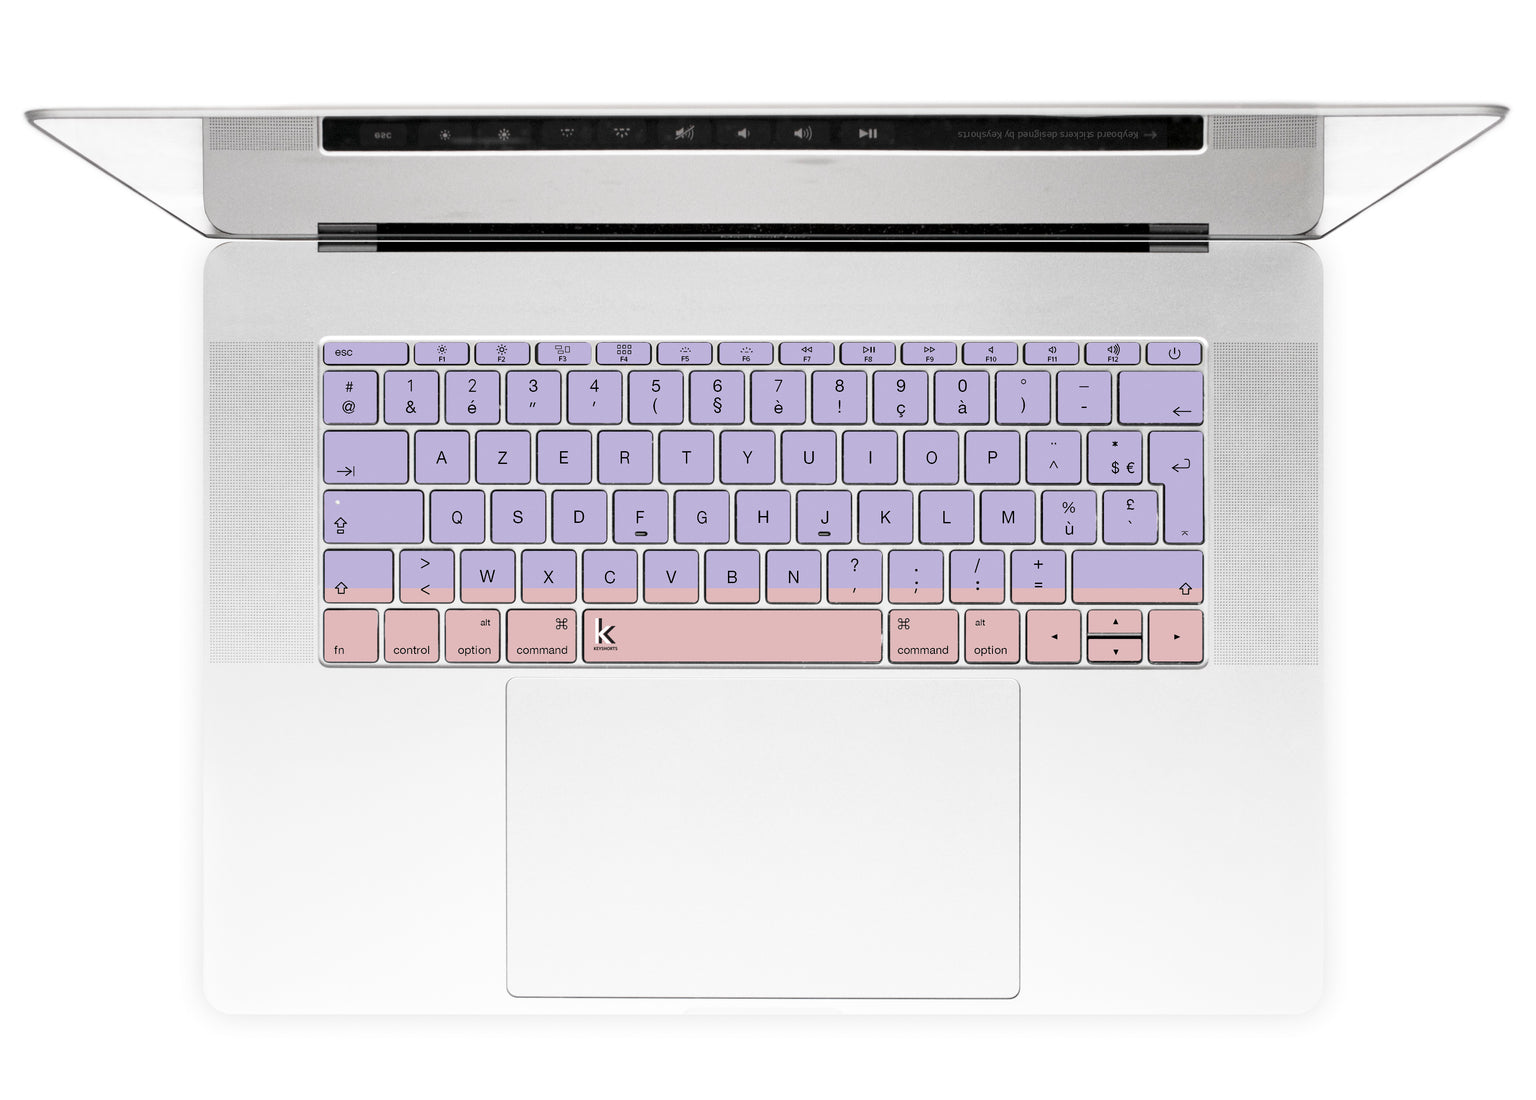 Pastelove Duo MacBook Keyboard Stickers alternate FR